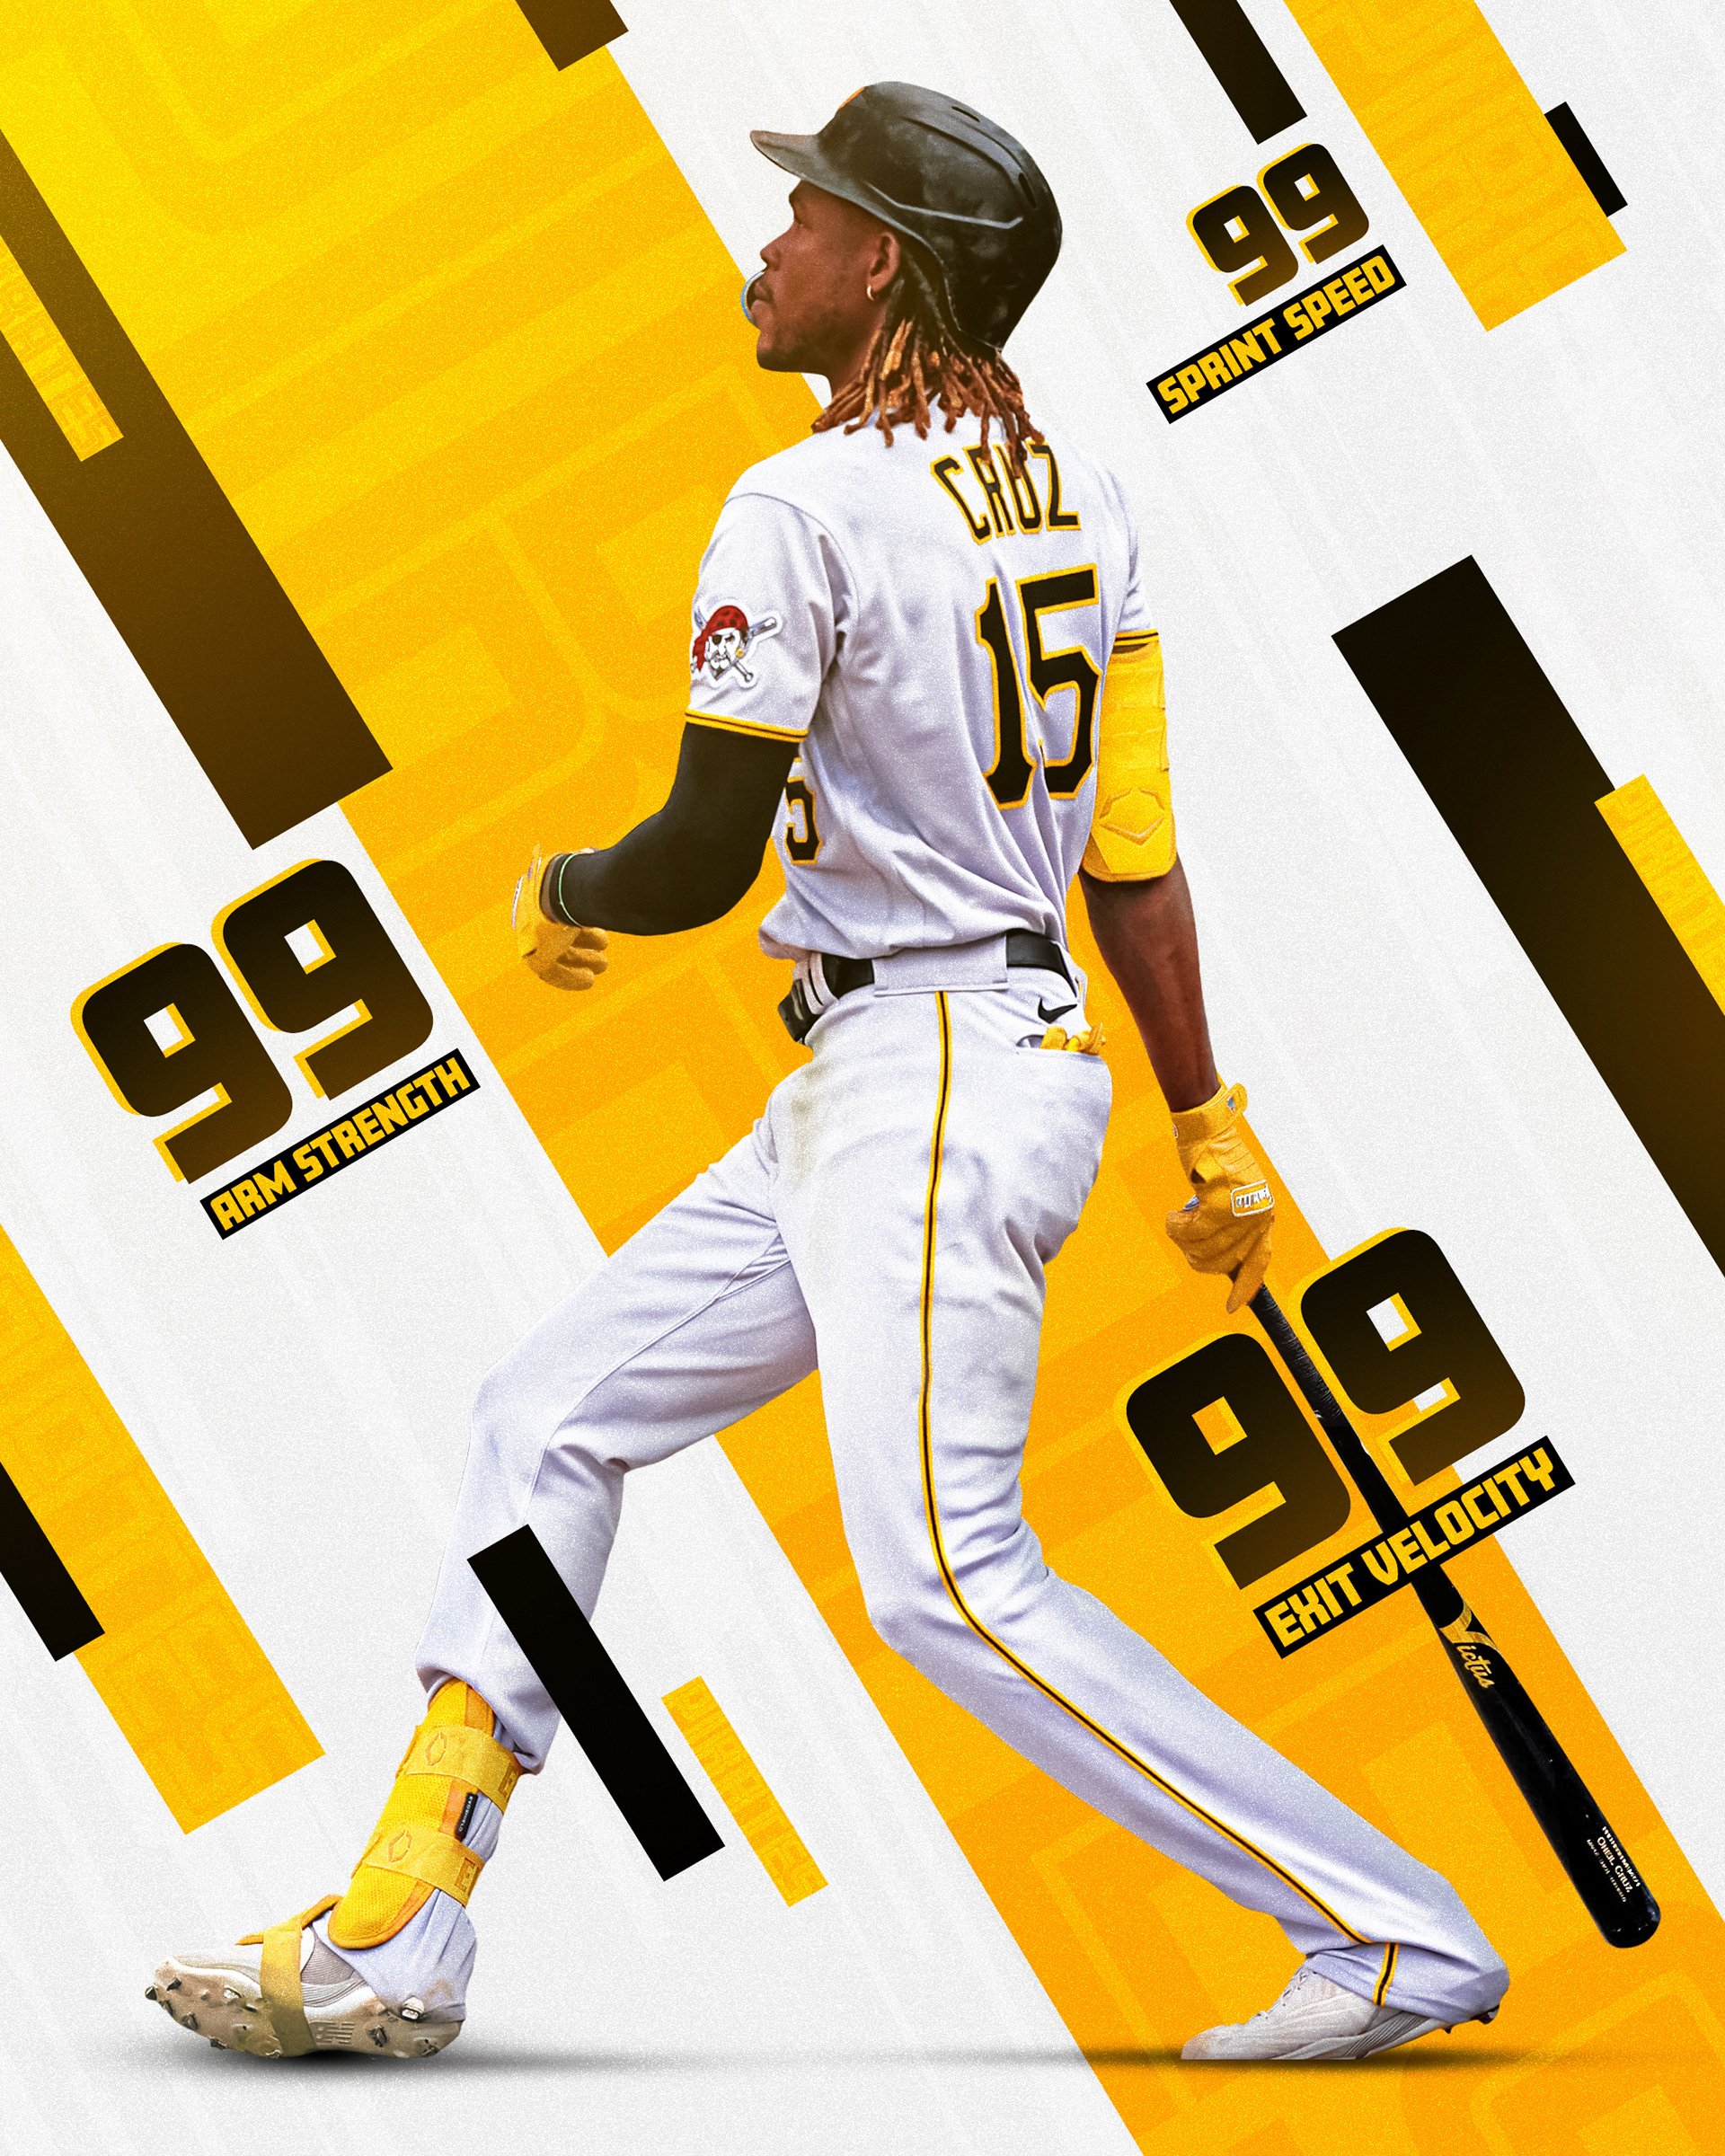 Baseball Collection - Nick Jones Graphic Design — Nick Jones Creative -  Graphic Design & Digital Media